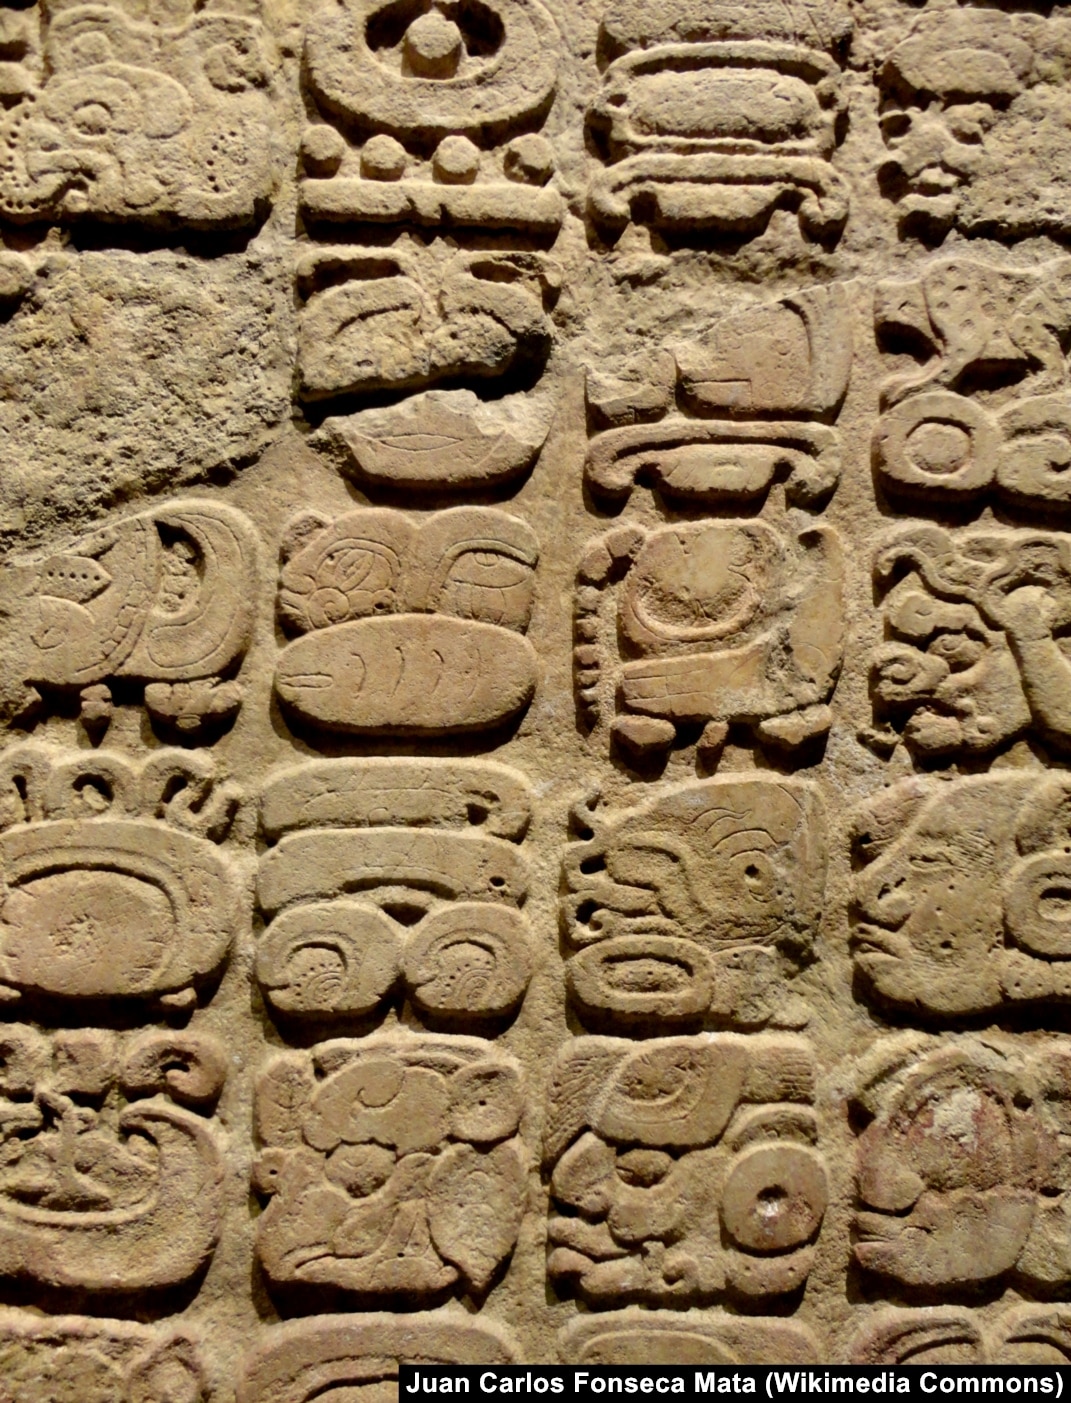 Yuri Knorozov: The Maverick Scholar Who Cracked The Maya Code